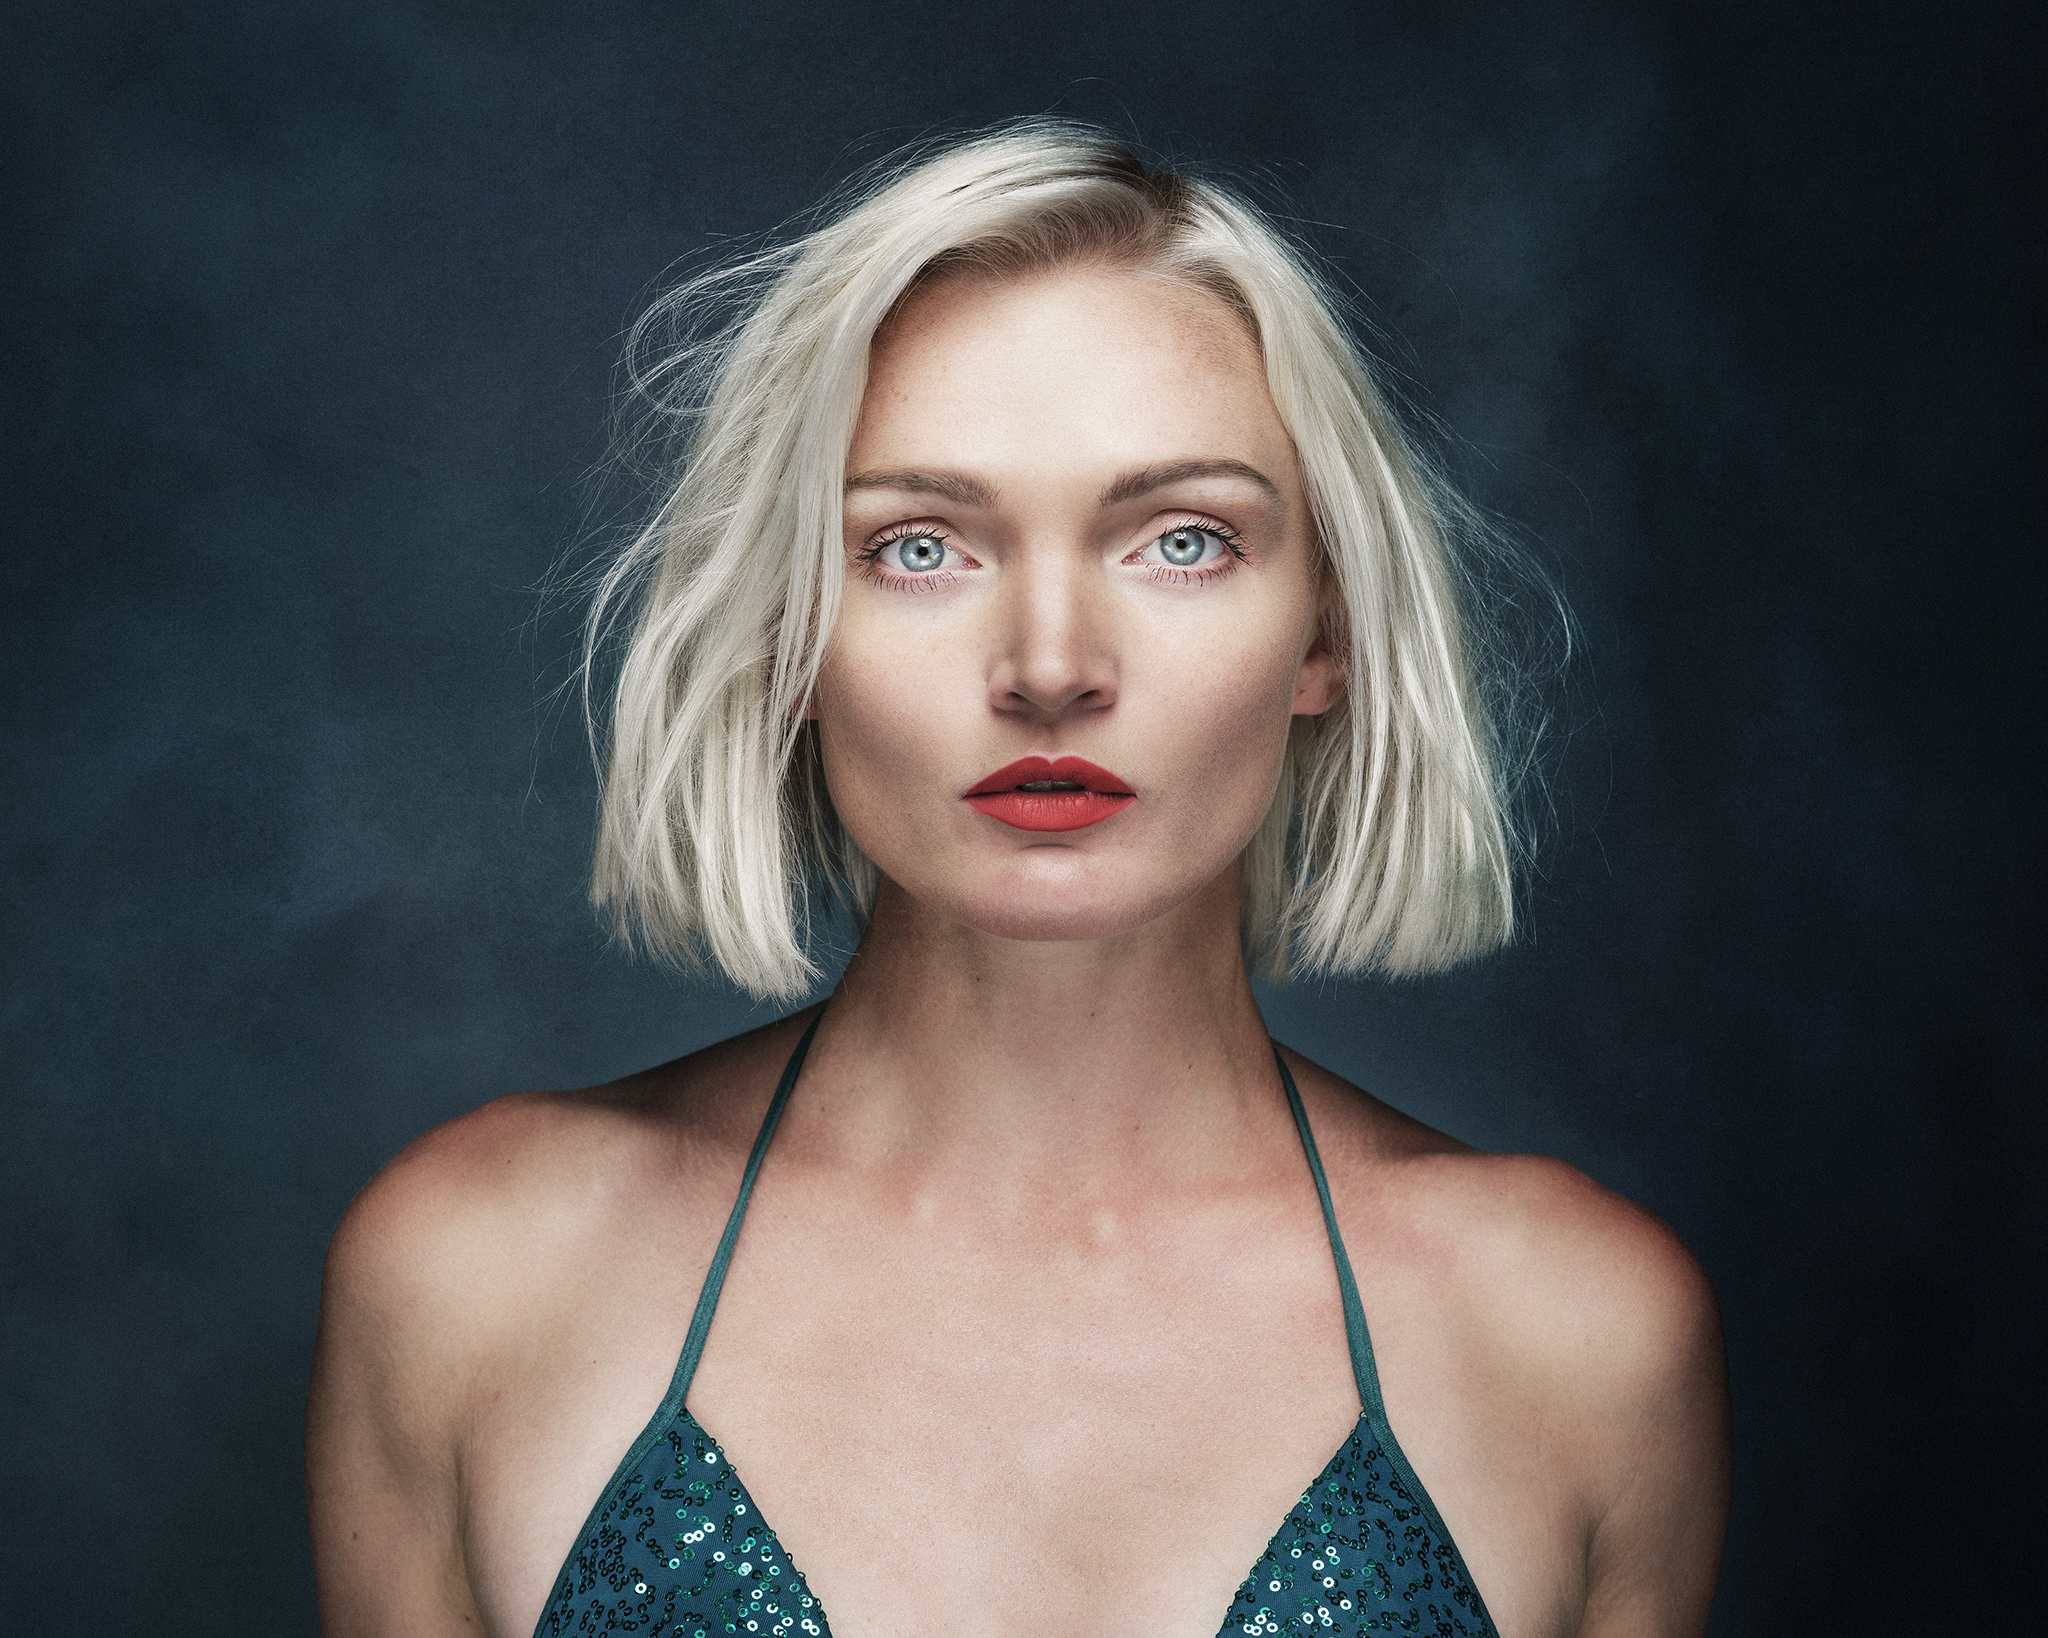 blonde with green top studio portrait by Boudoir Photographer Lancashire